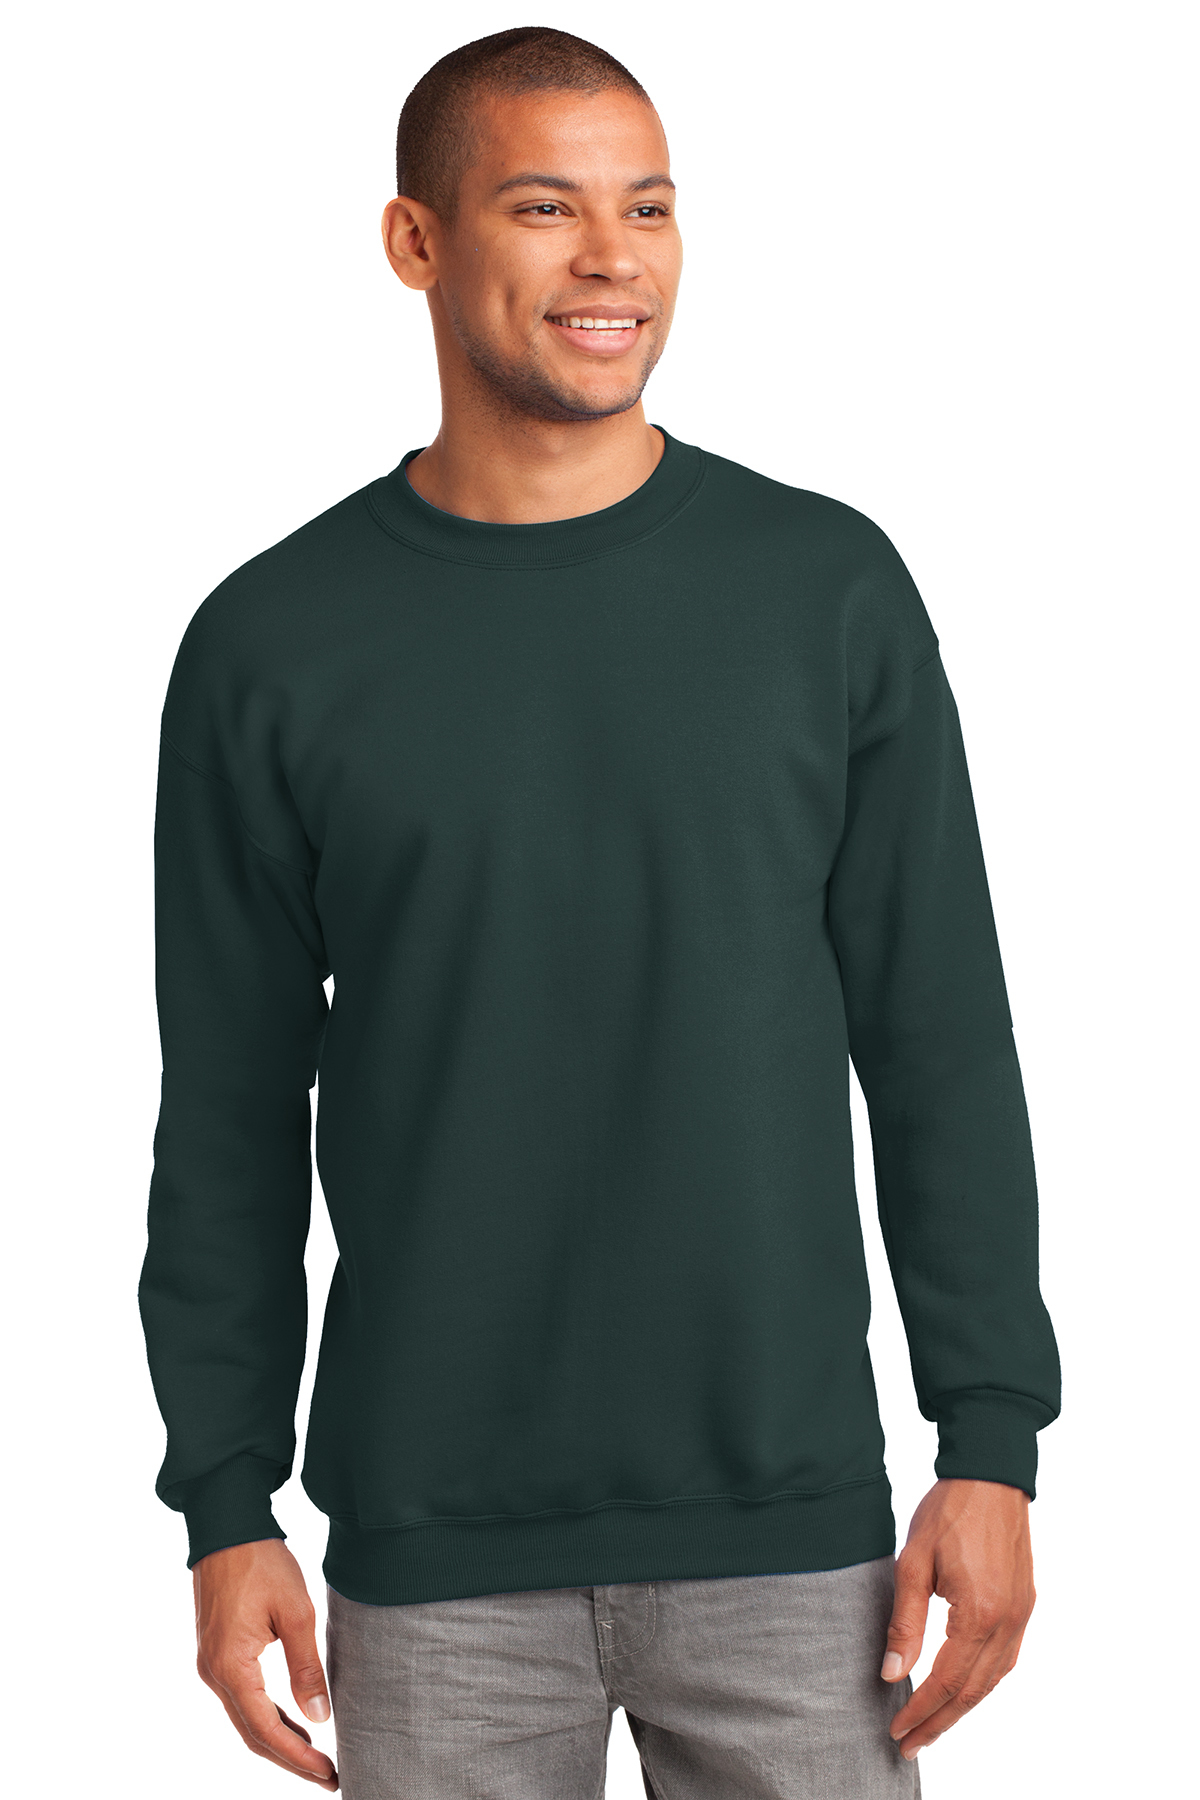 Port & Company Tall Ultimate Crewneck Sweatshirt. PC90T - Sweatshirts